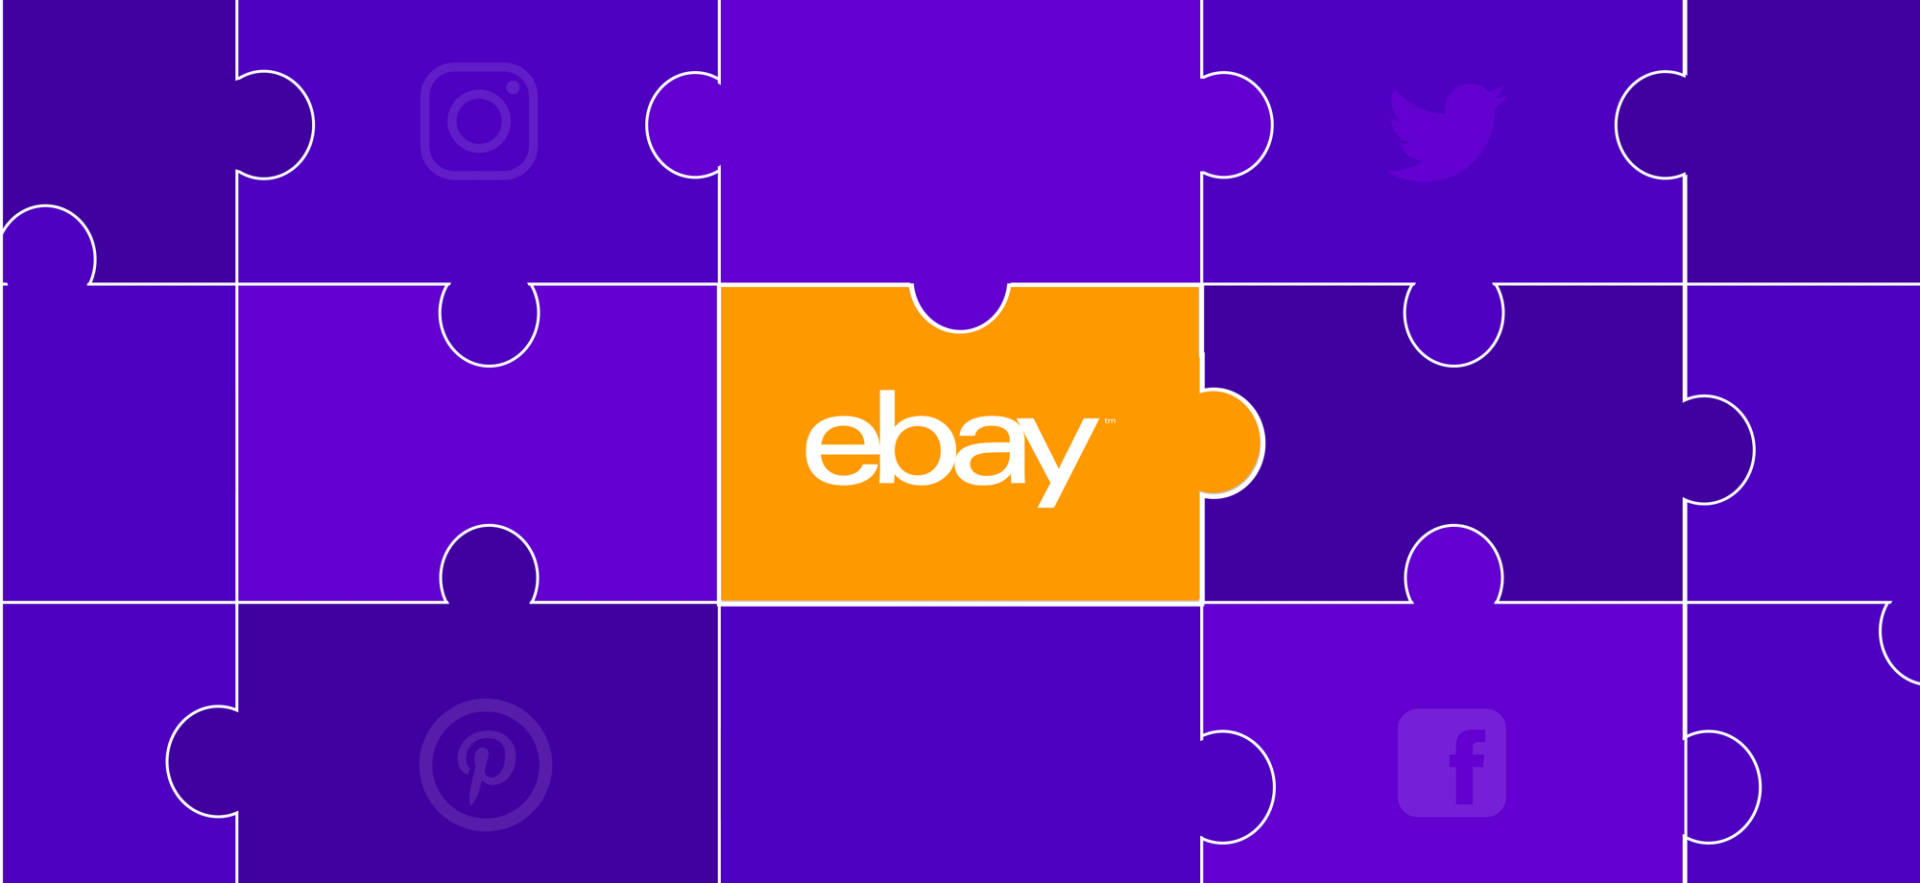 Free Ebay Wallpaper Downloads, [100+] Ebay Wallpapers for FREE |  